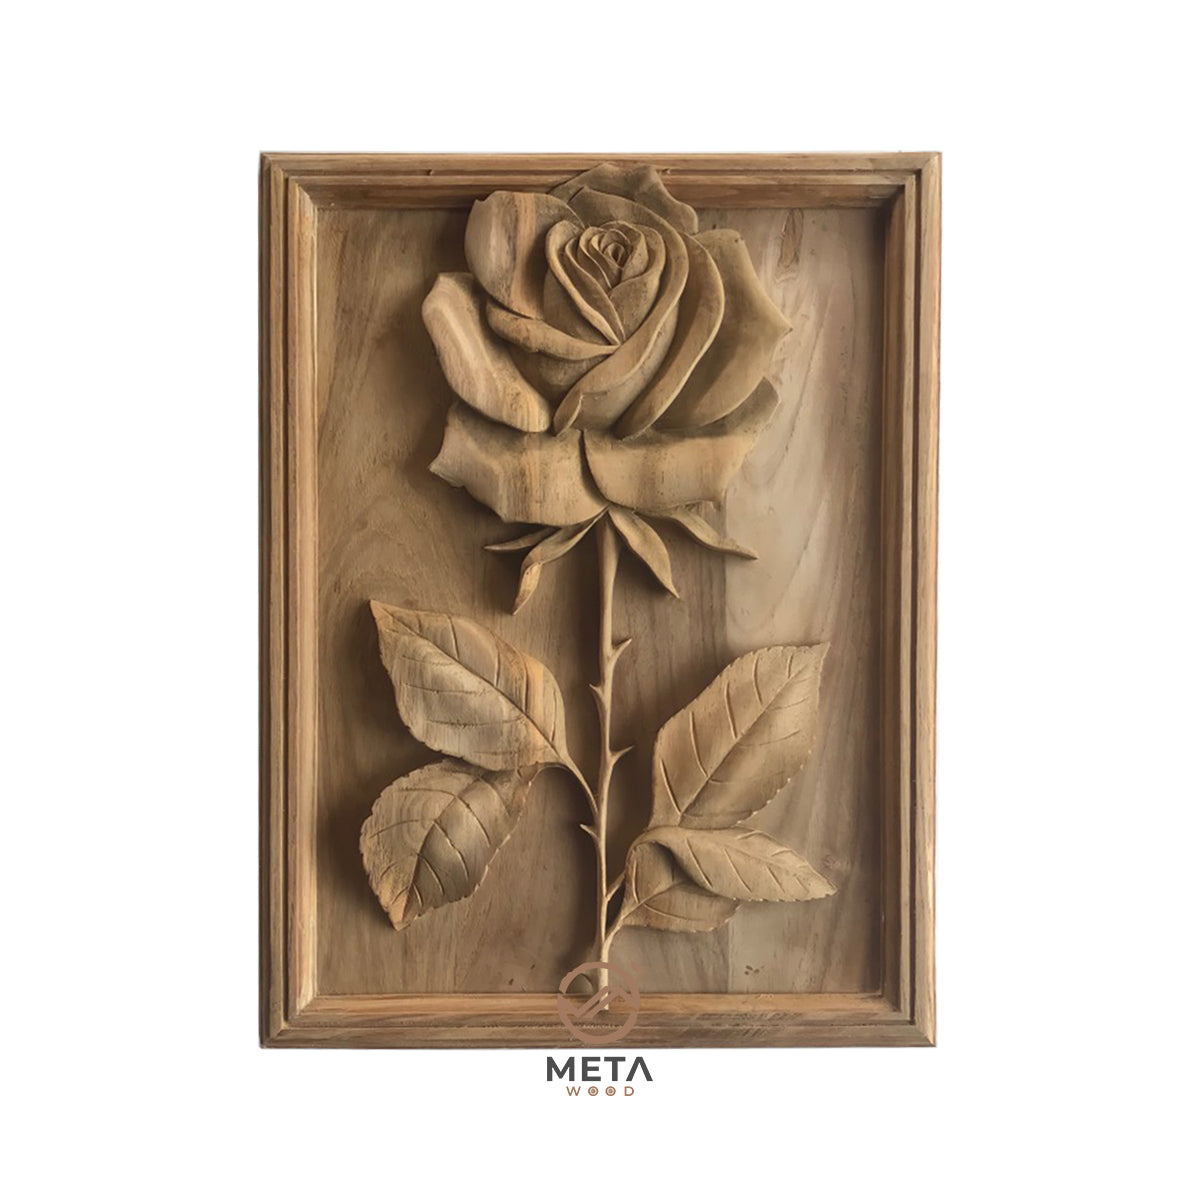 Rose Wood Carving - Flower Art